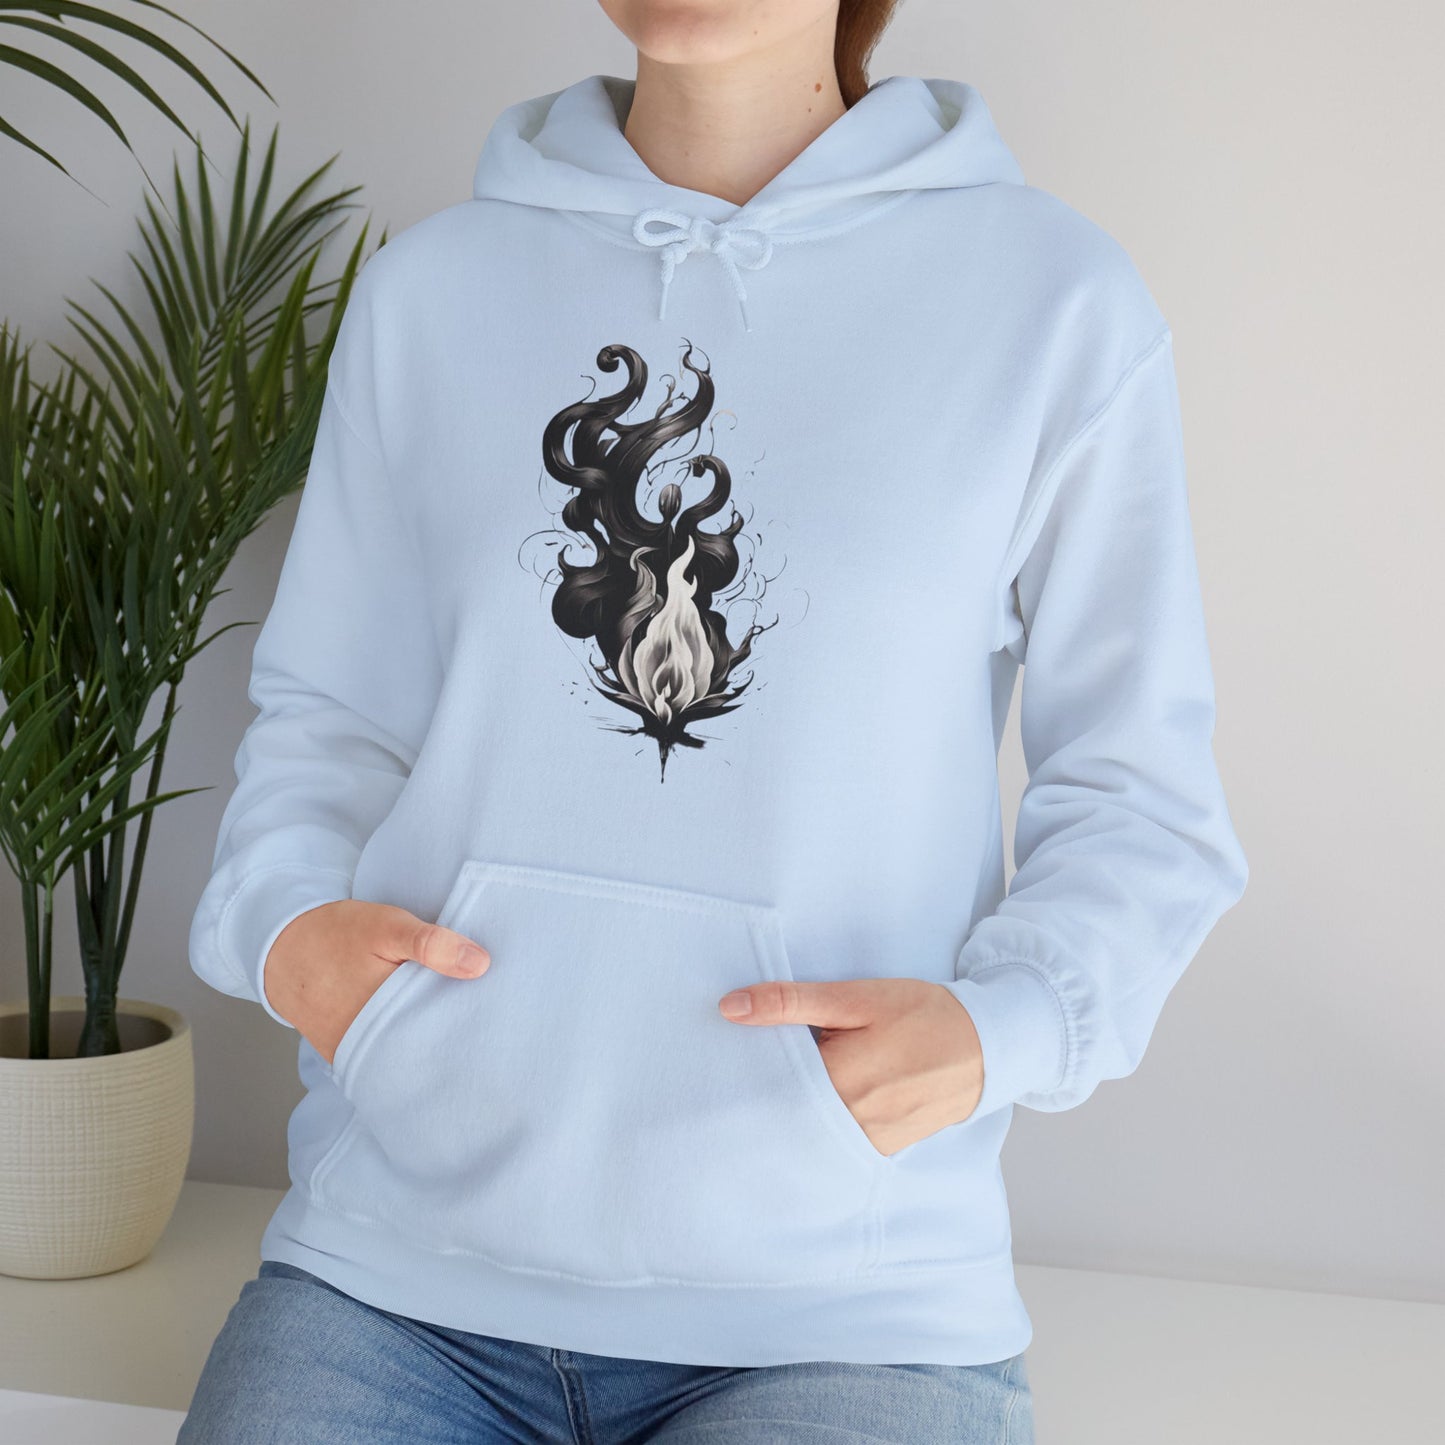 Black and White Flame - Unisex Hooded Sweatshirt